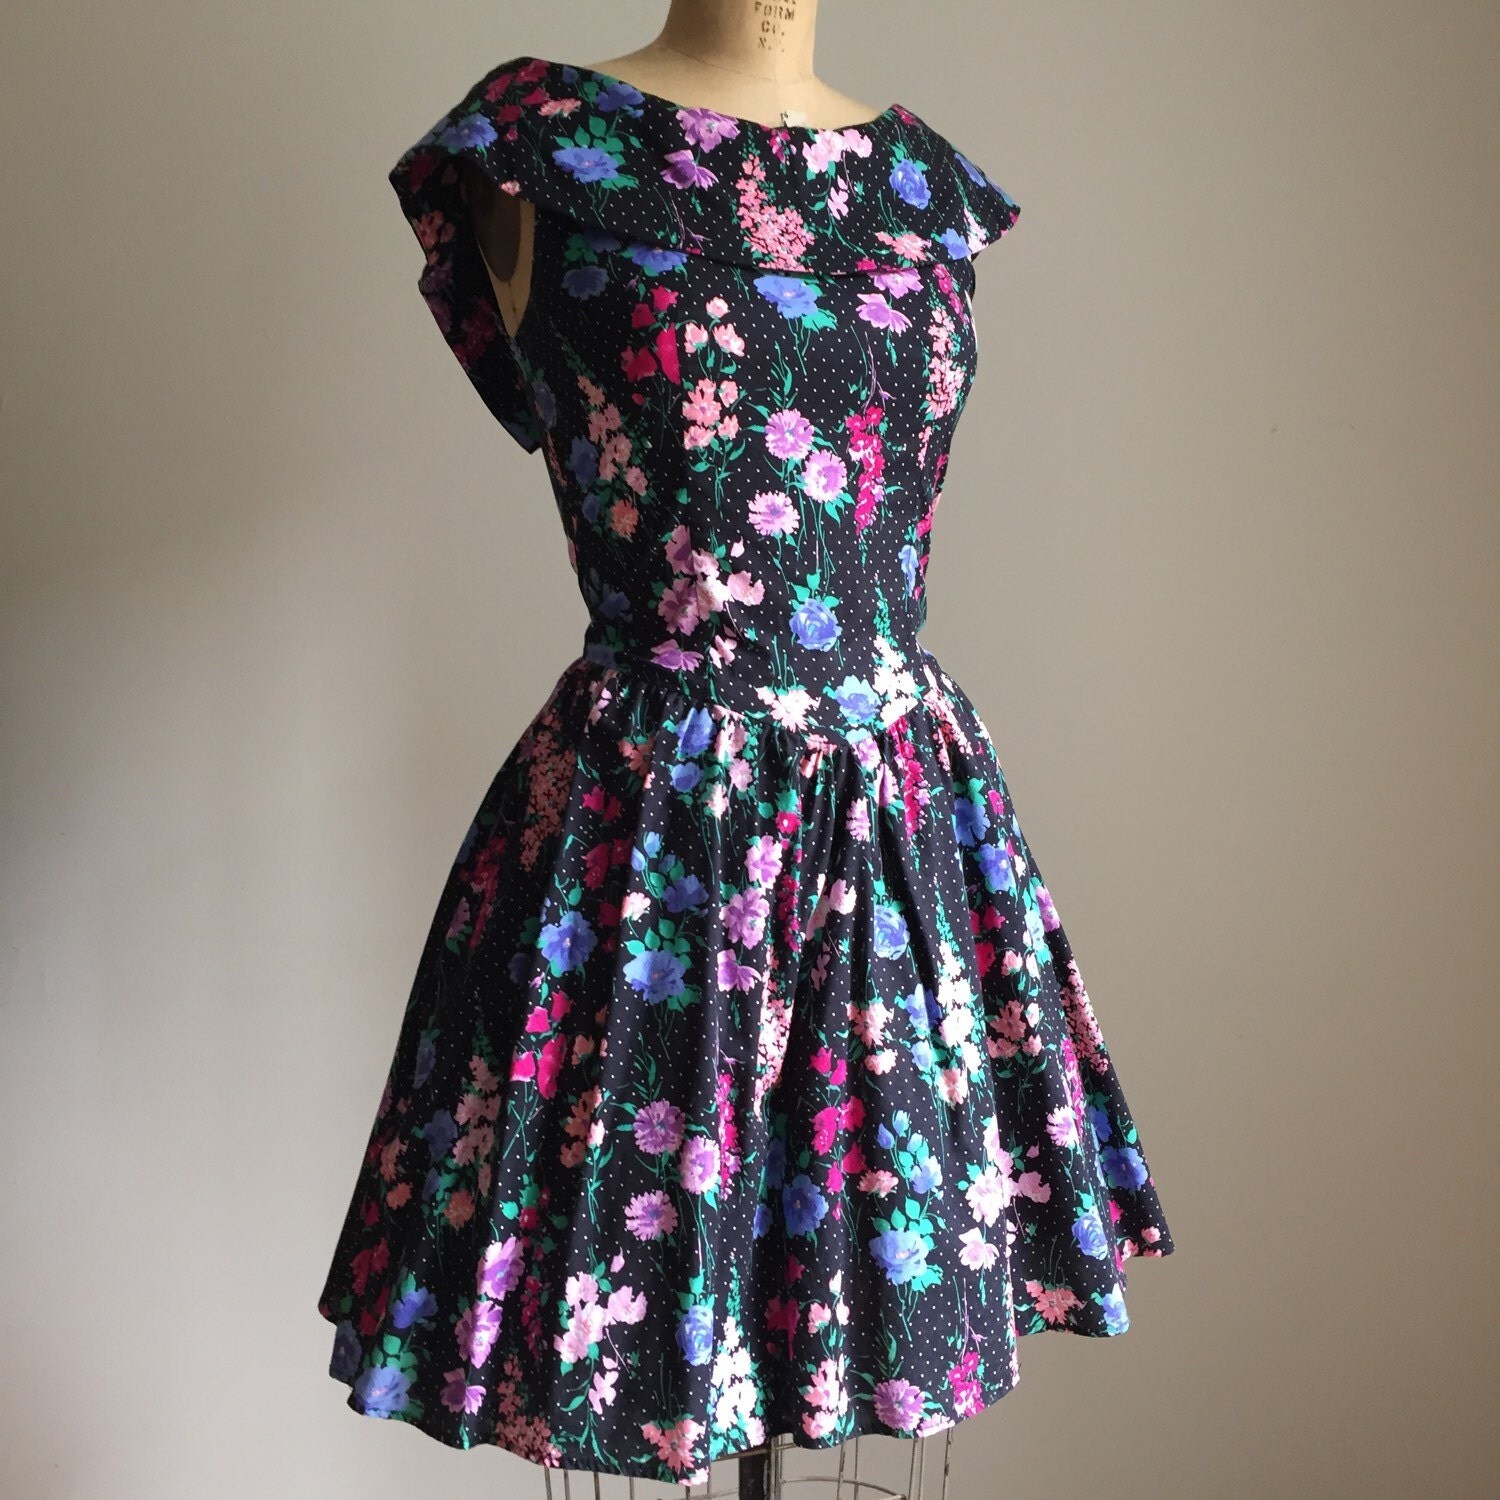 1980s floral retro inspired mini dress / full skirt with tule